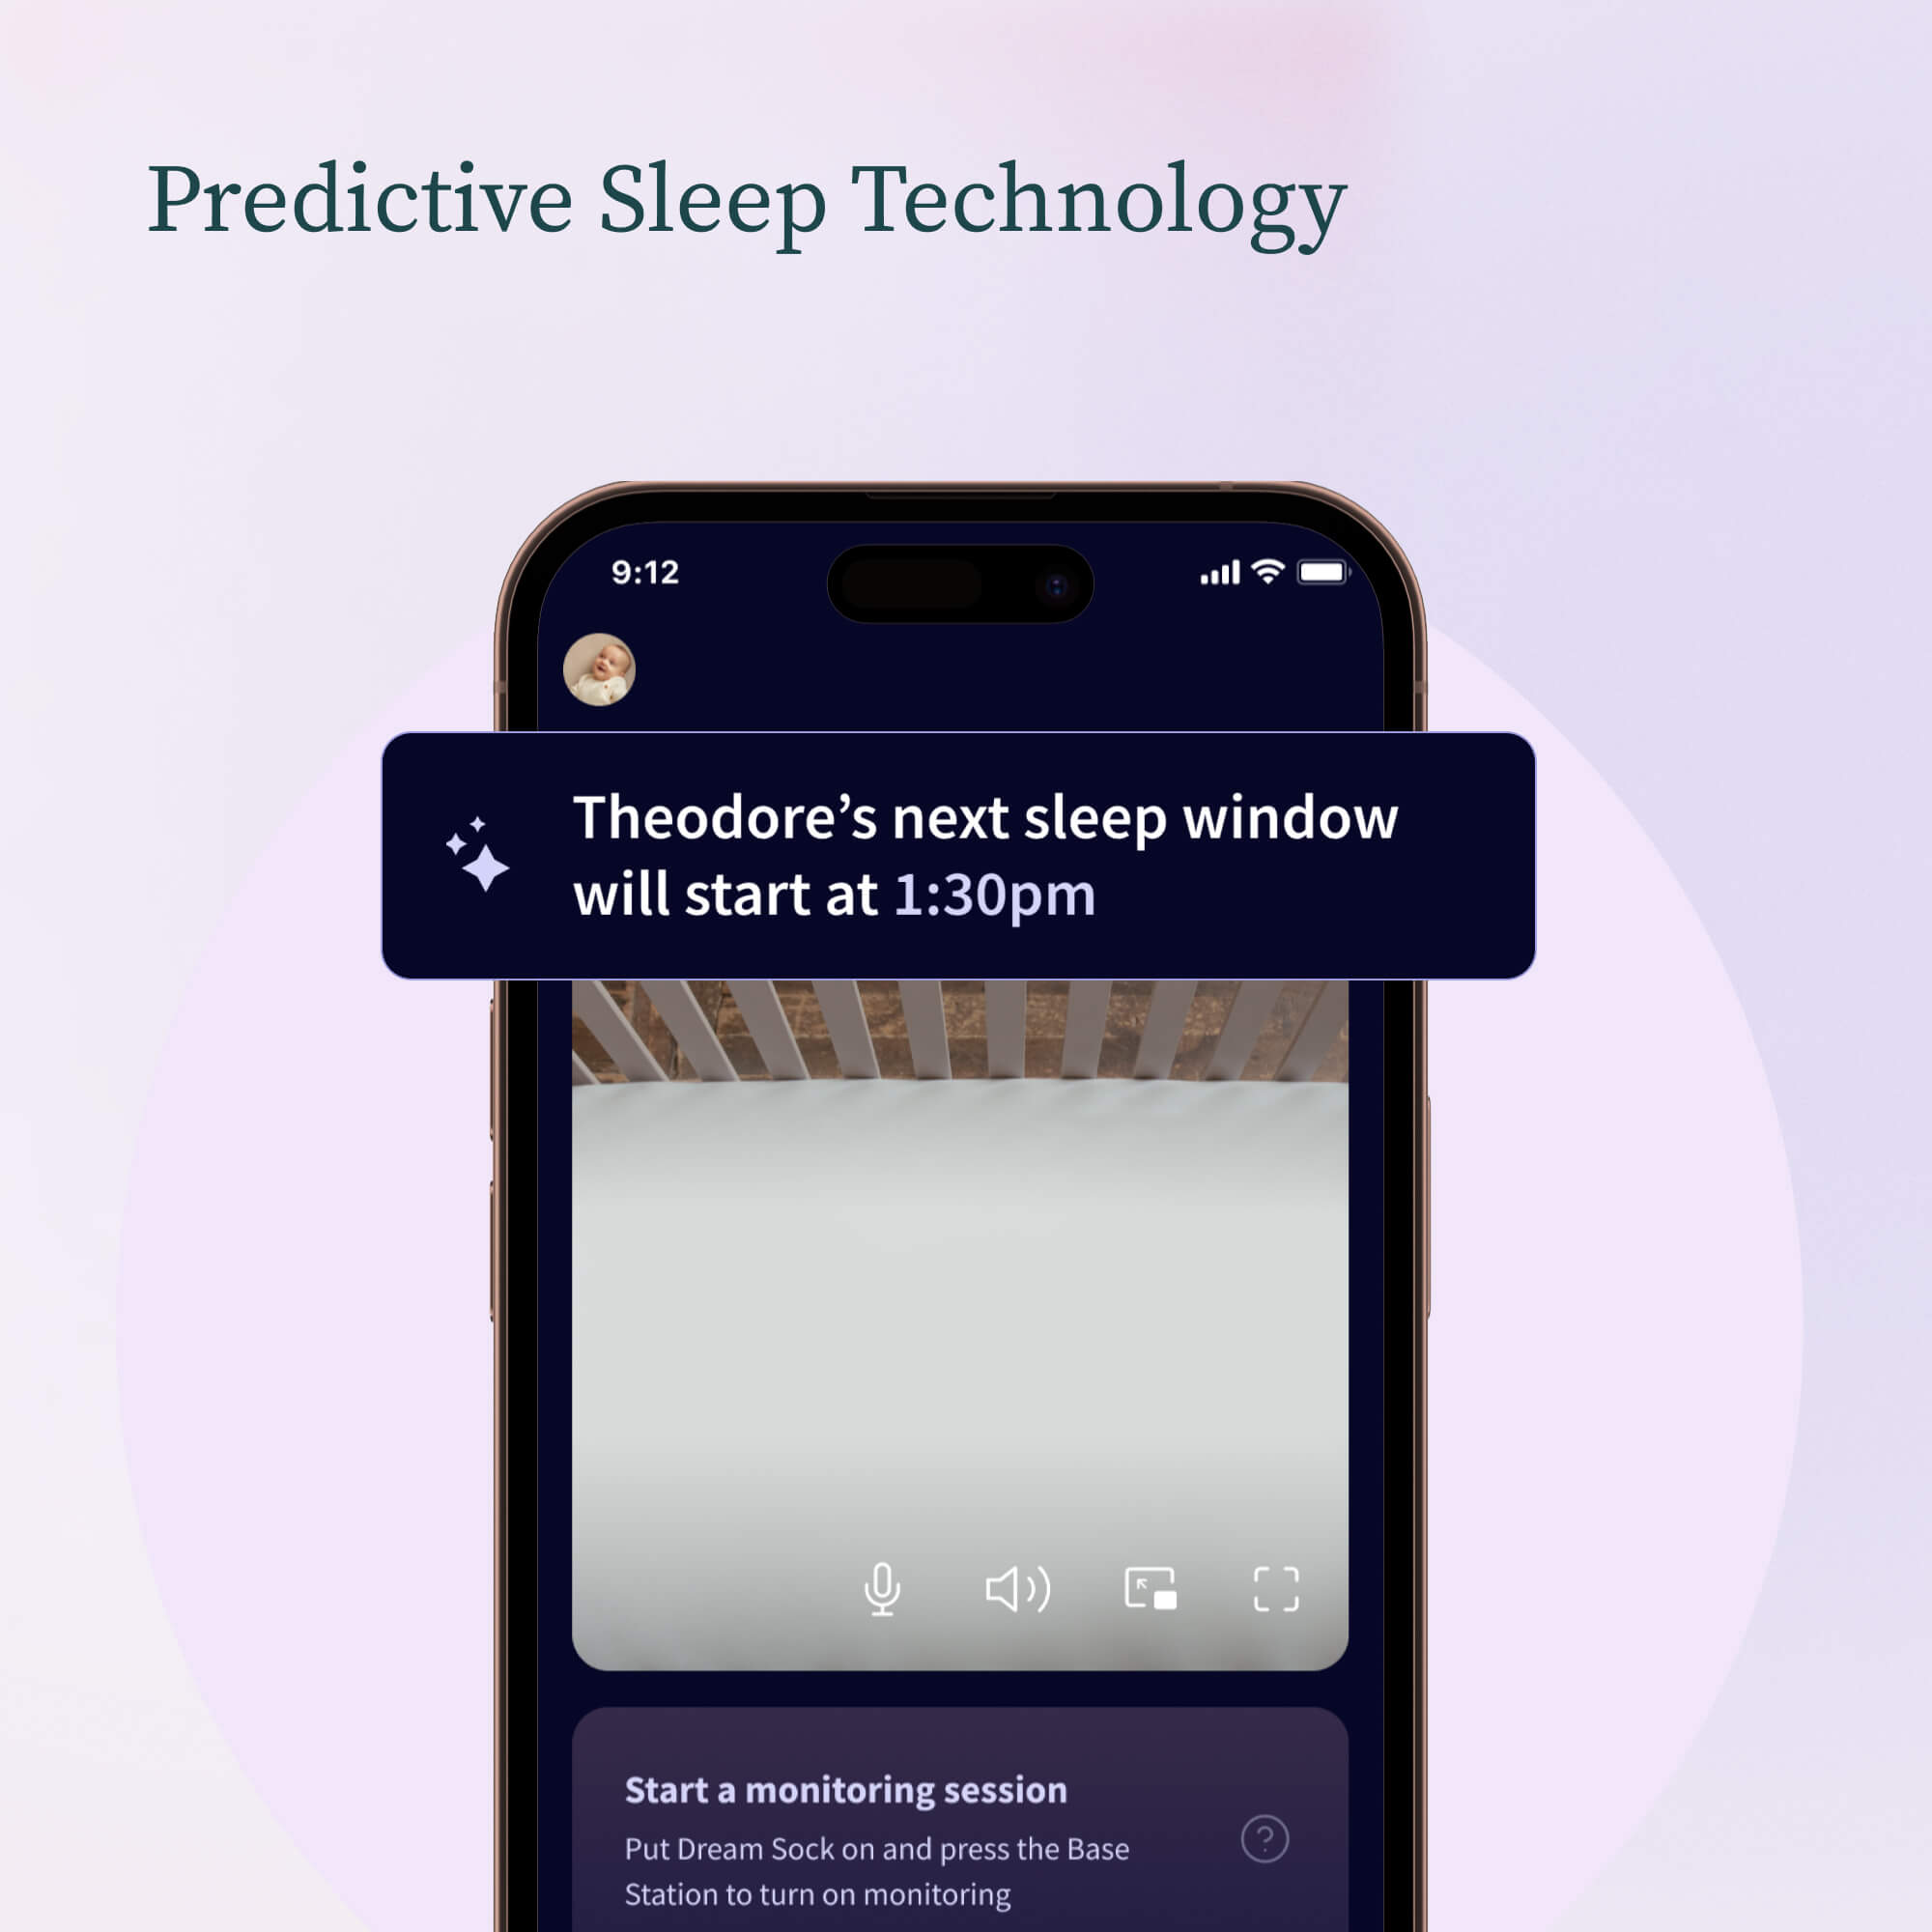 Predictive sleep technology